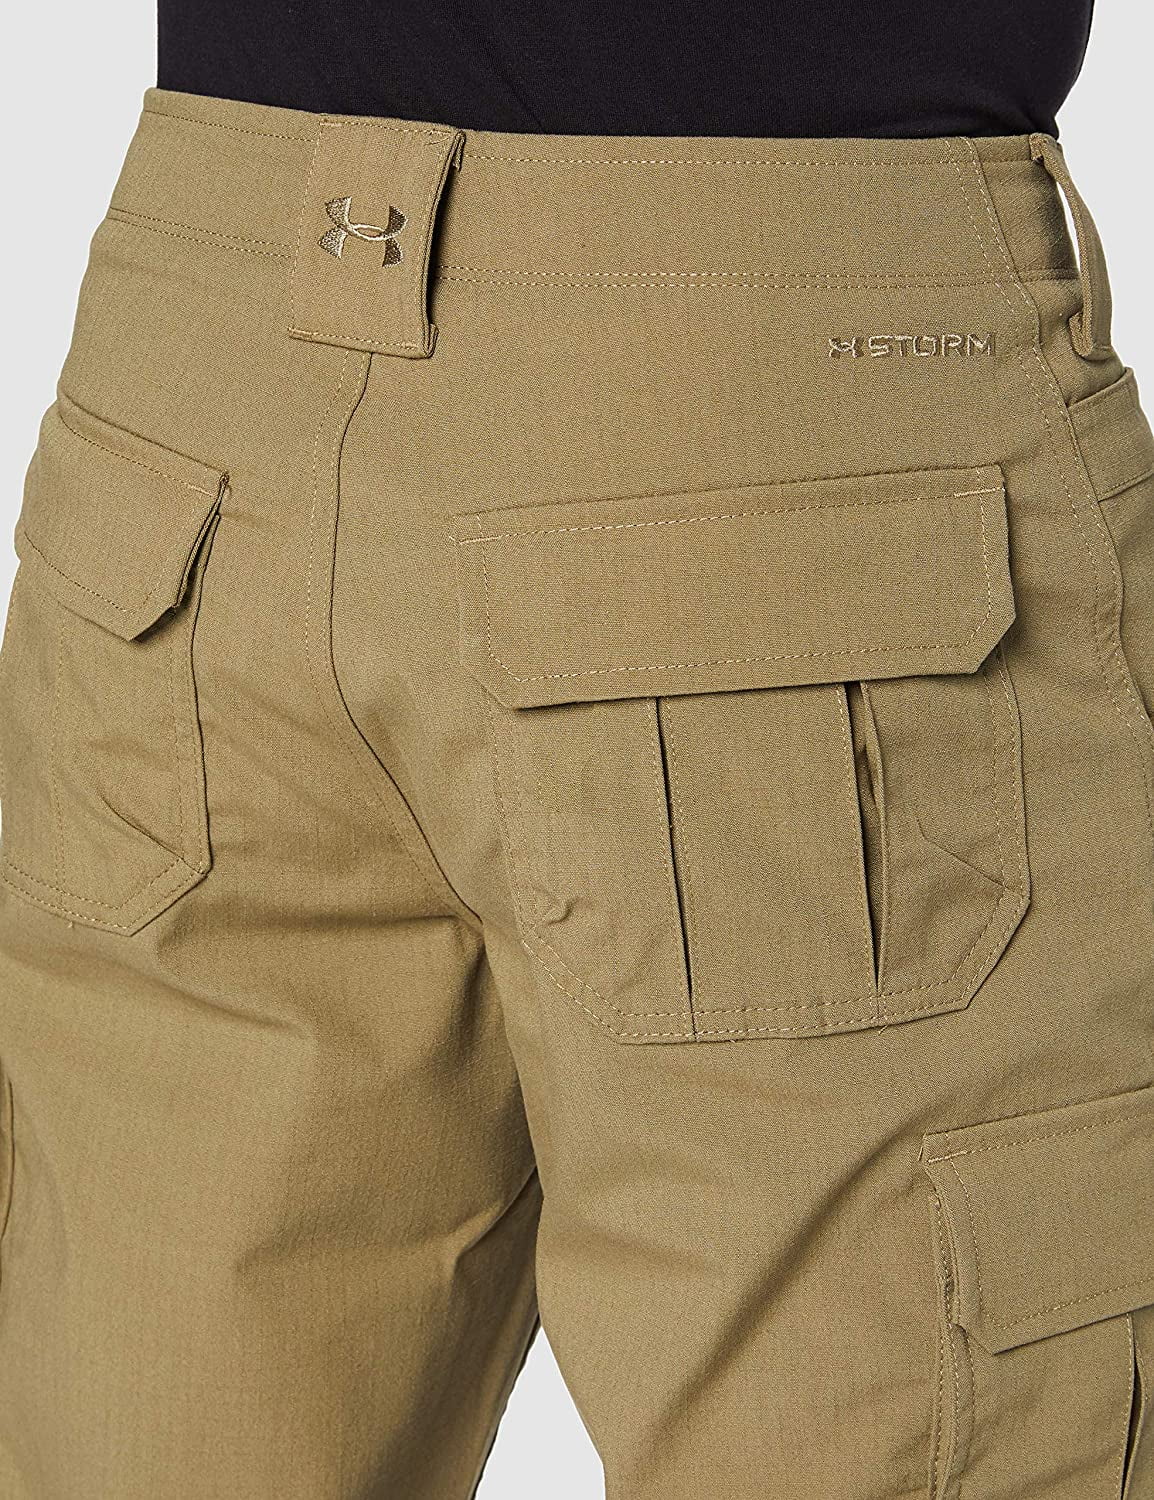 UNDER ARMOUR UA Tactical Patrol Pants - Bayou - Size 30 x 34